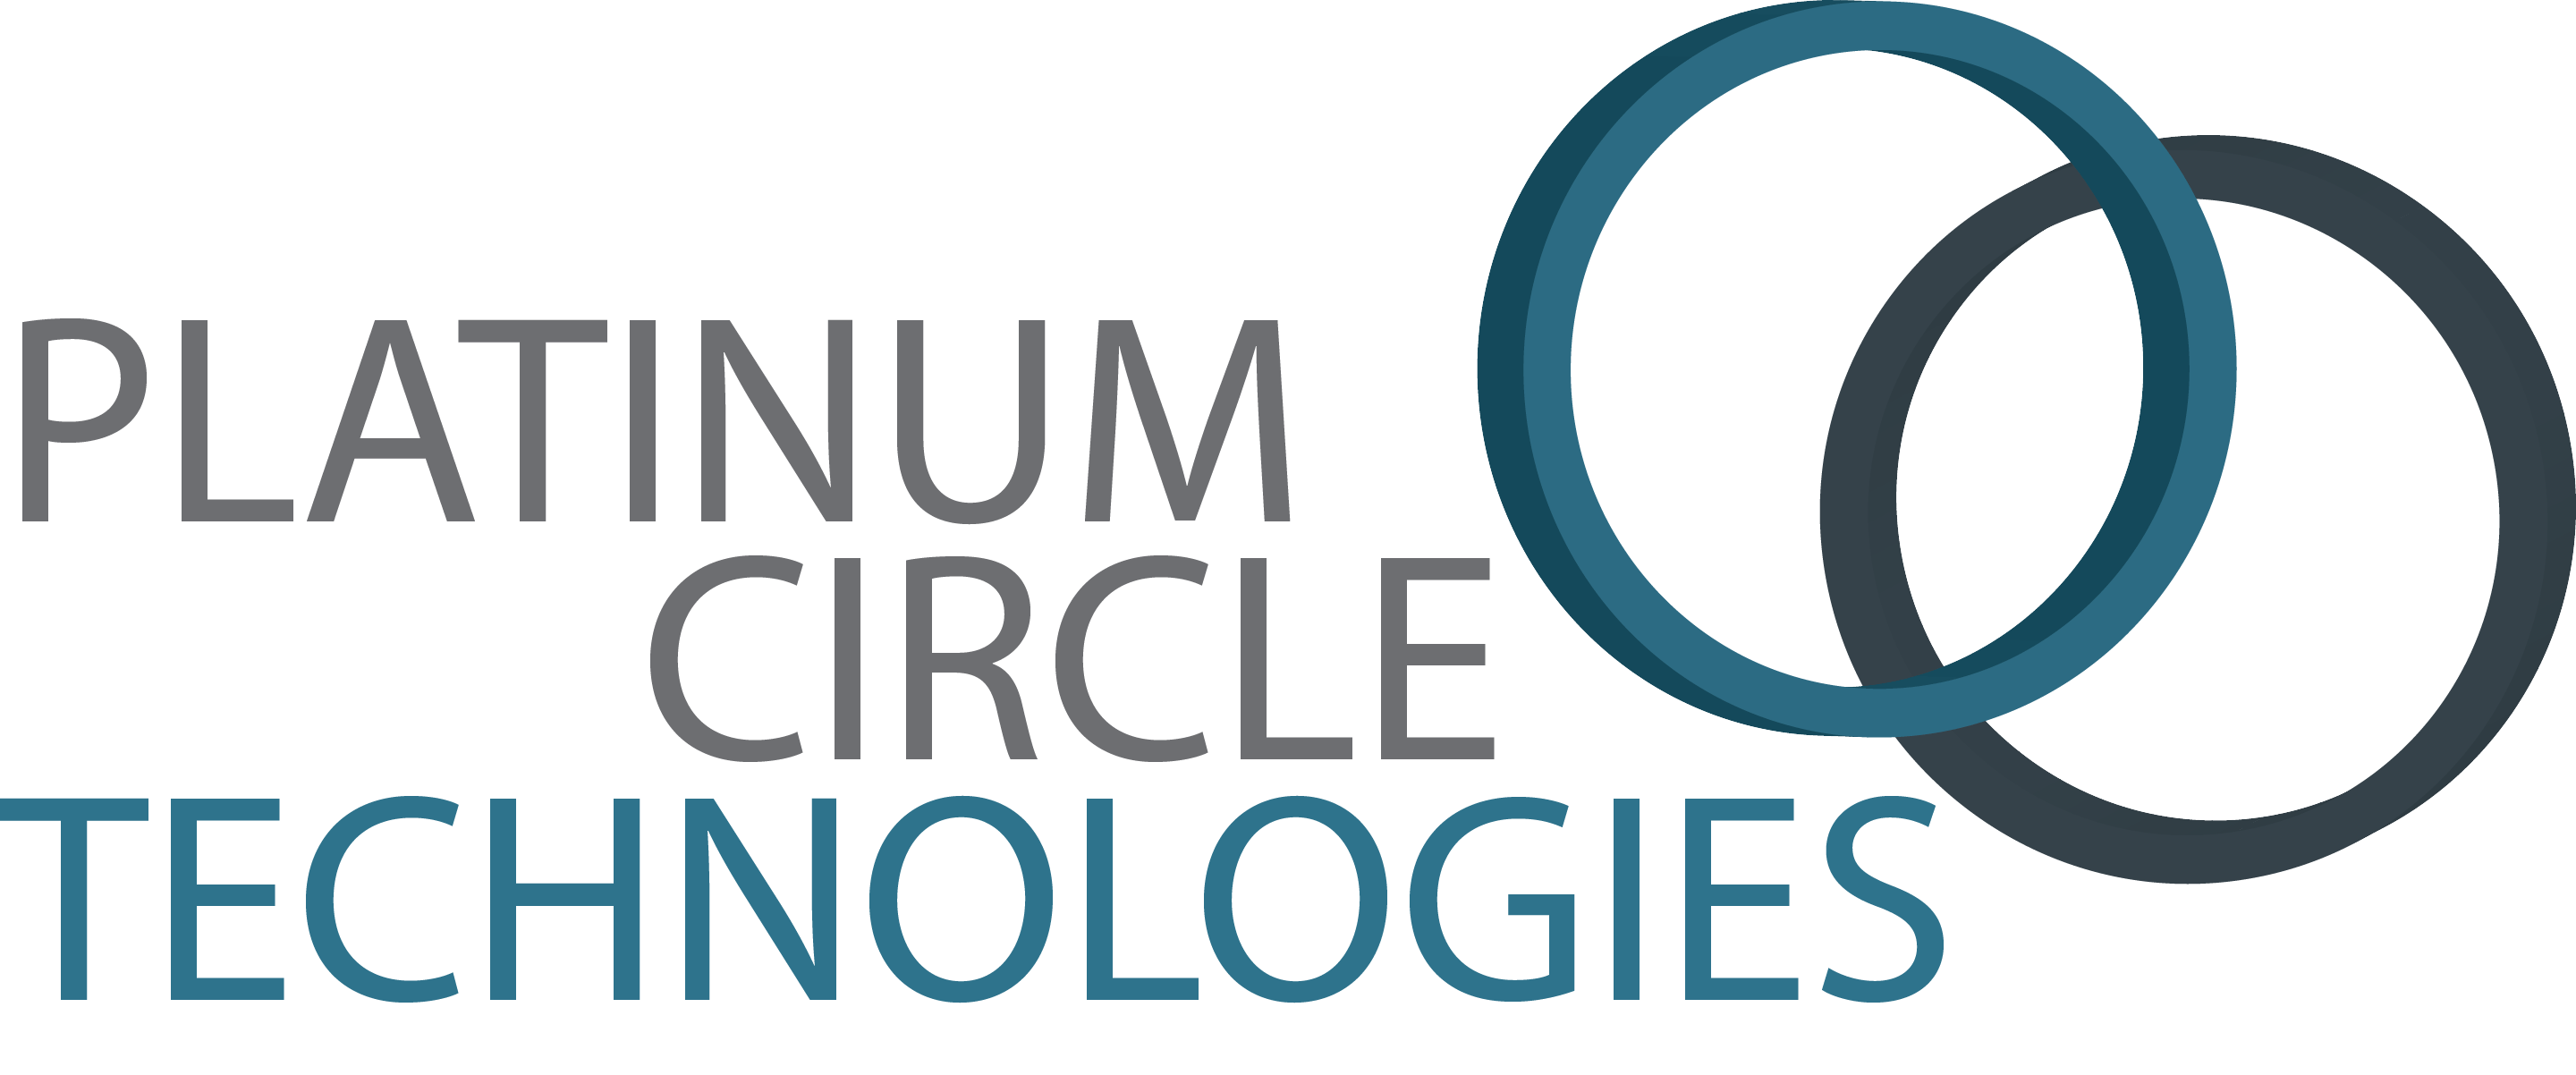 Platinum Circle Logo - Platinum Circle Technologies